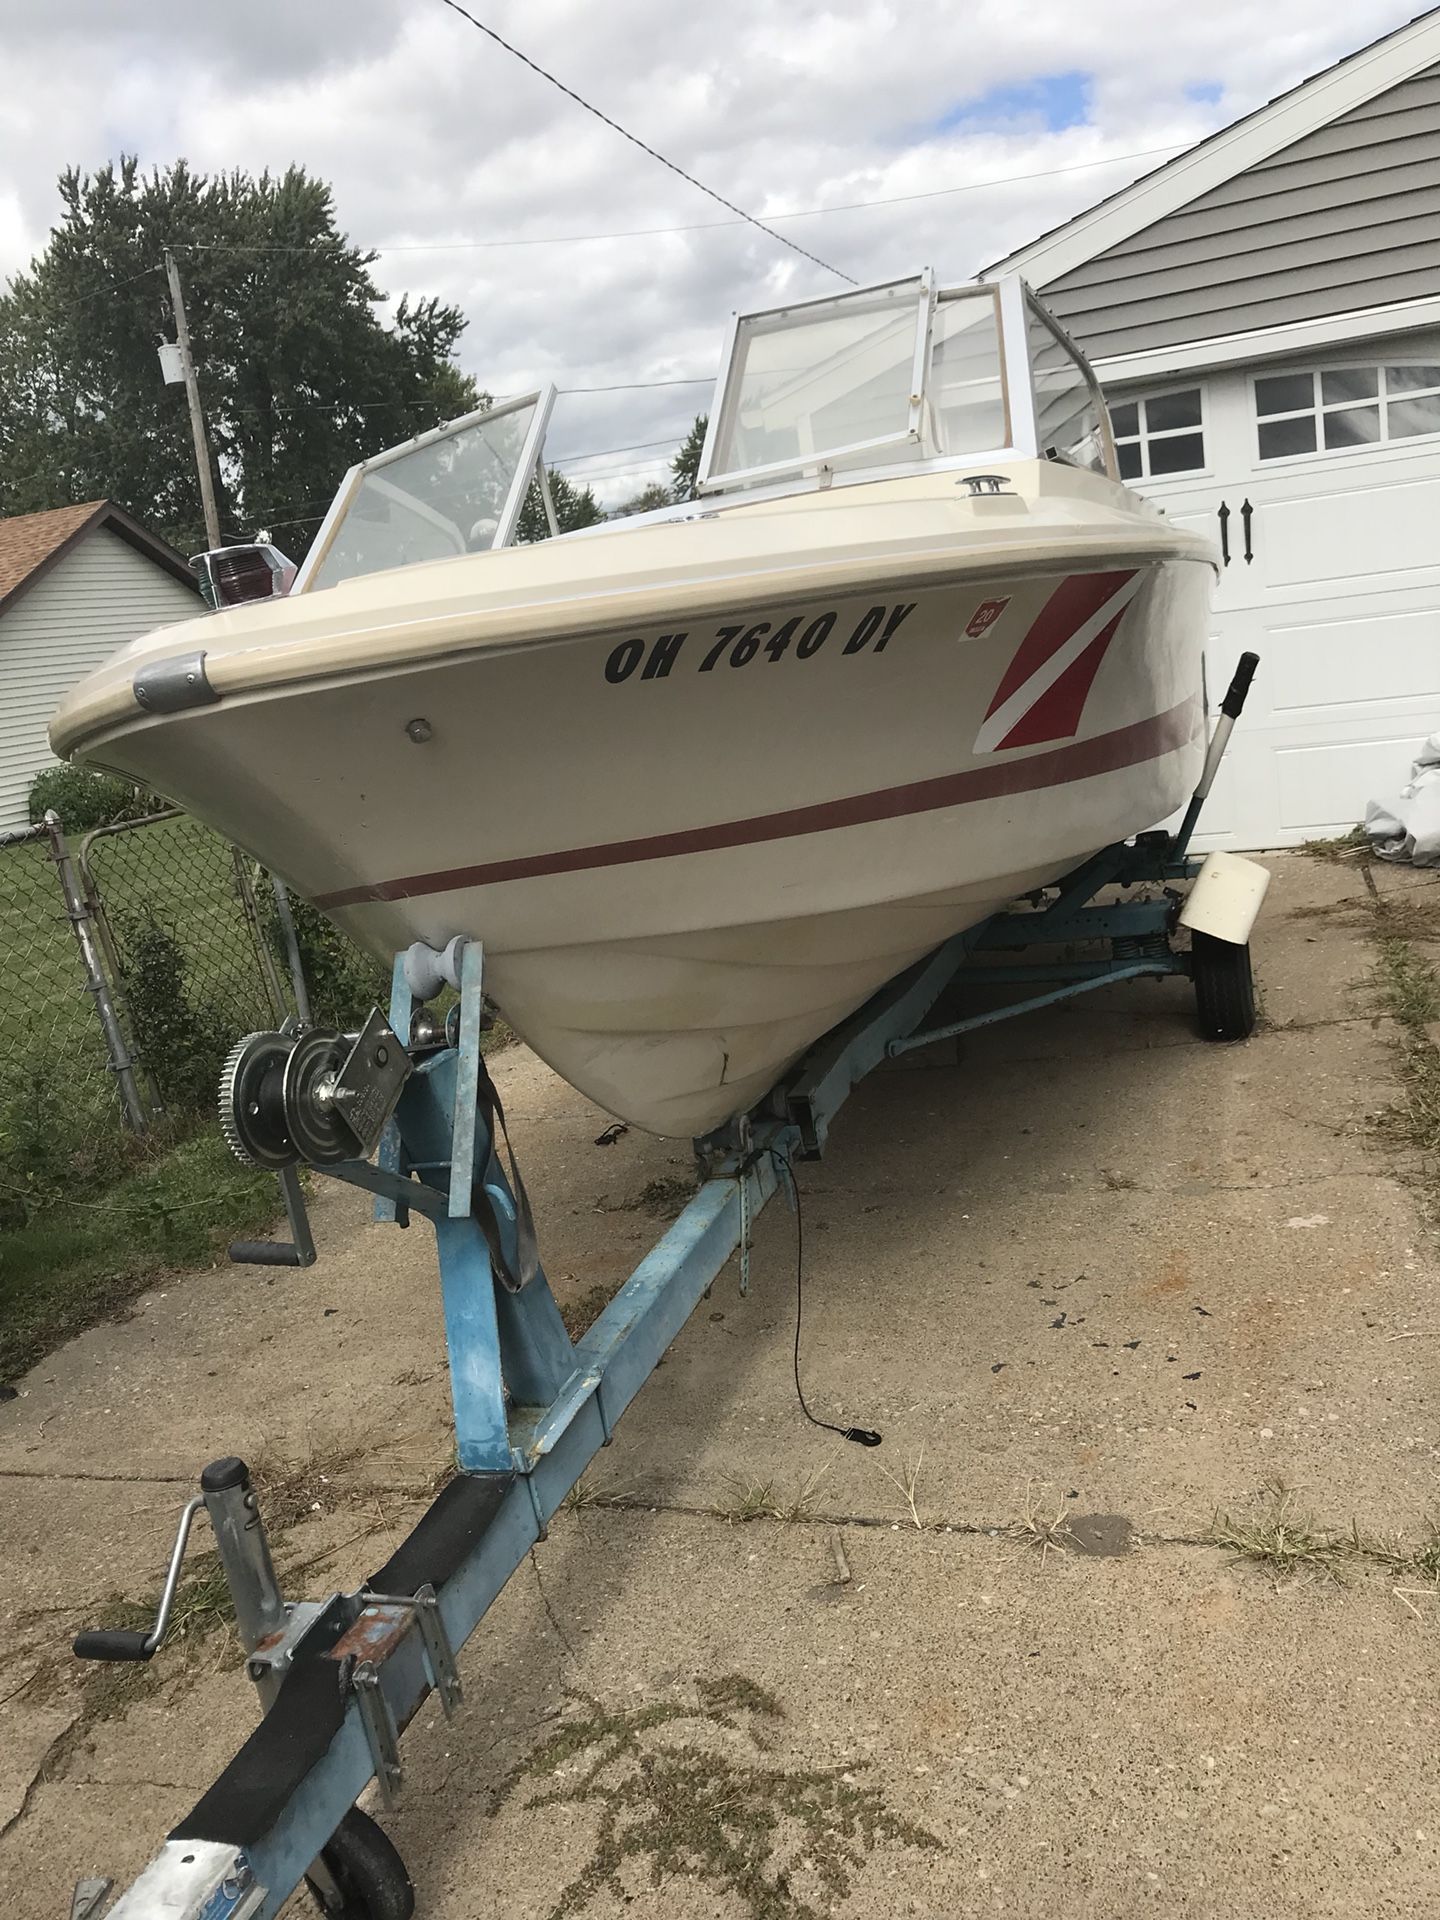 16-17 ft Larson boat